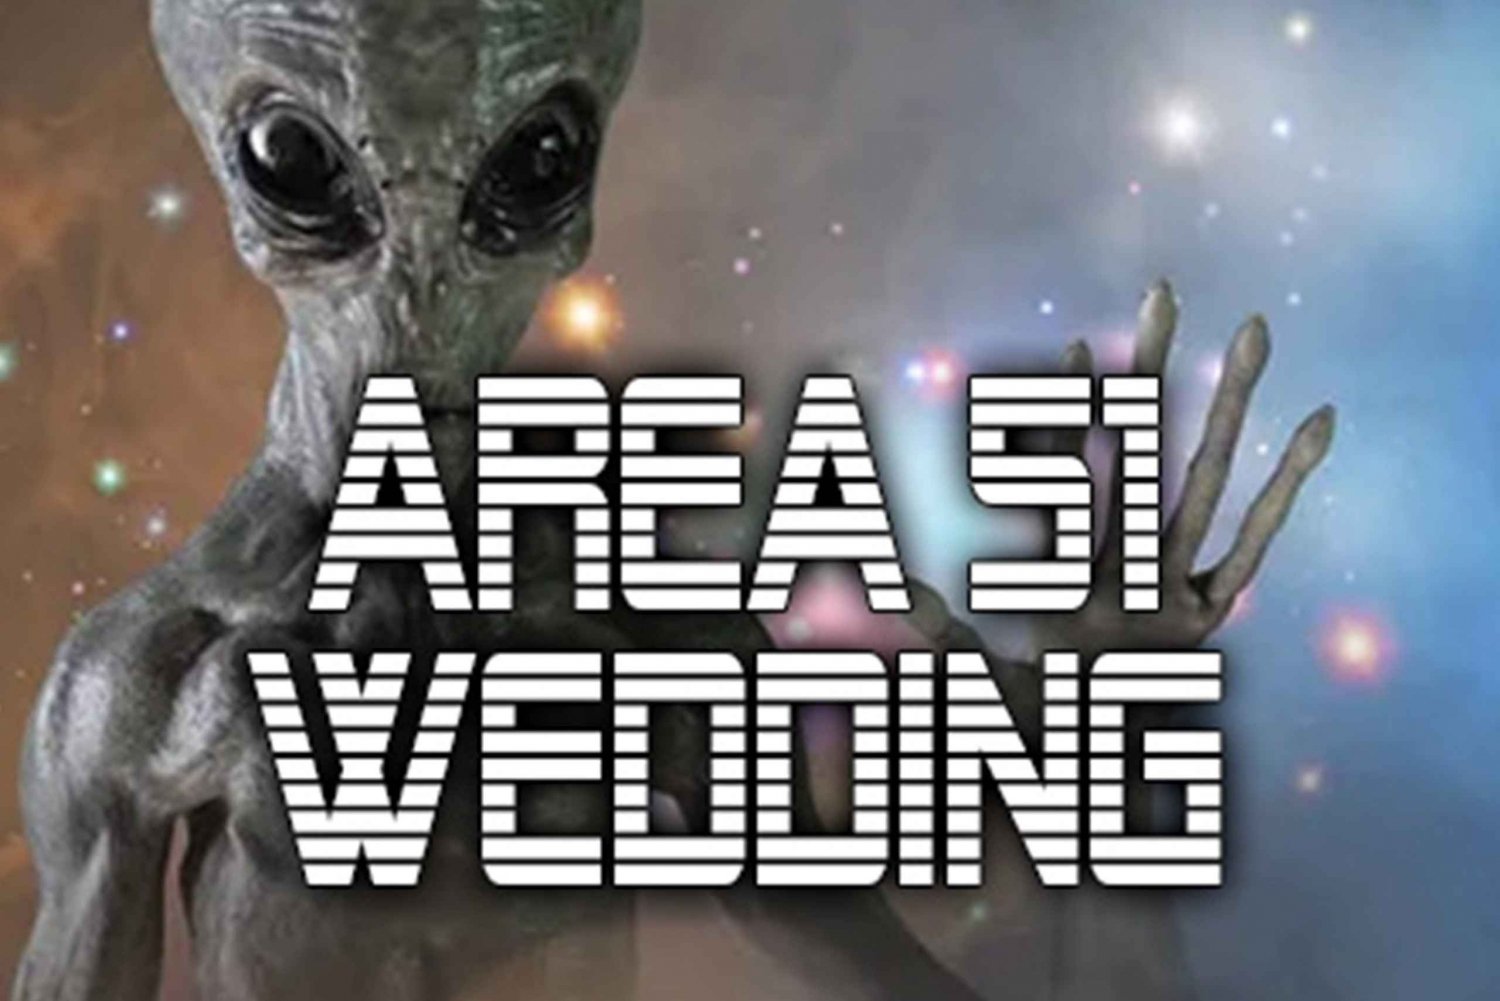 Las Vegasissa: Area 51 Wedding Ceremony + Upea valokuvaus: Area 51 Wedding Ceremony + Stunning Photography